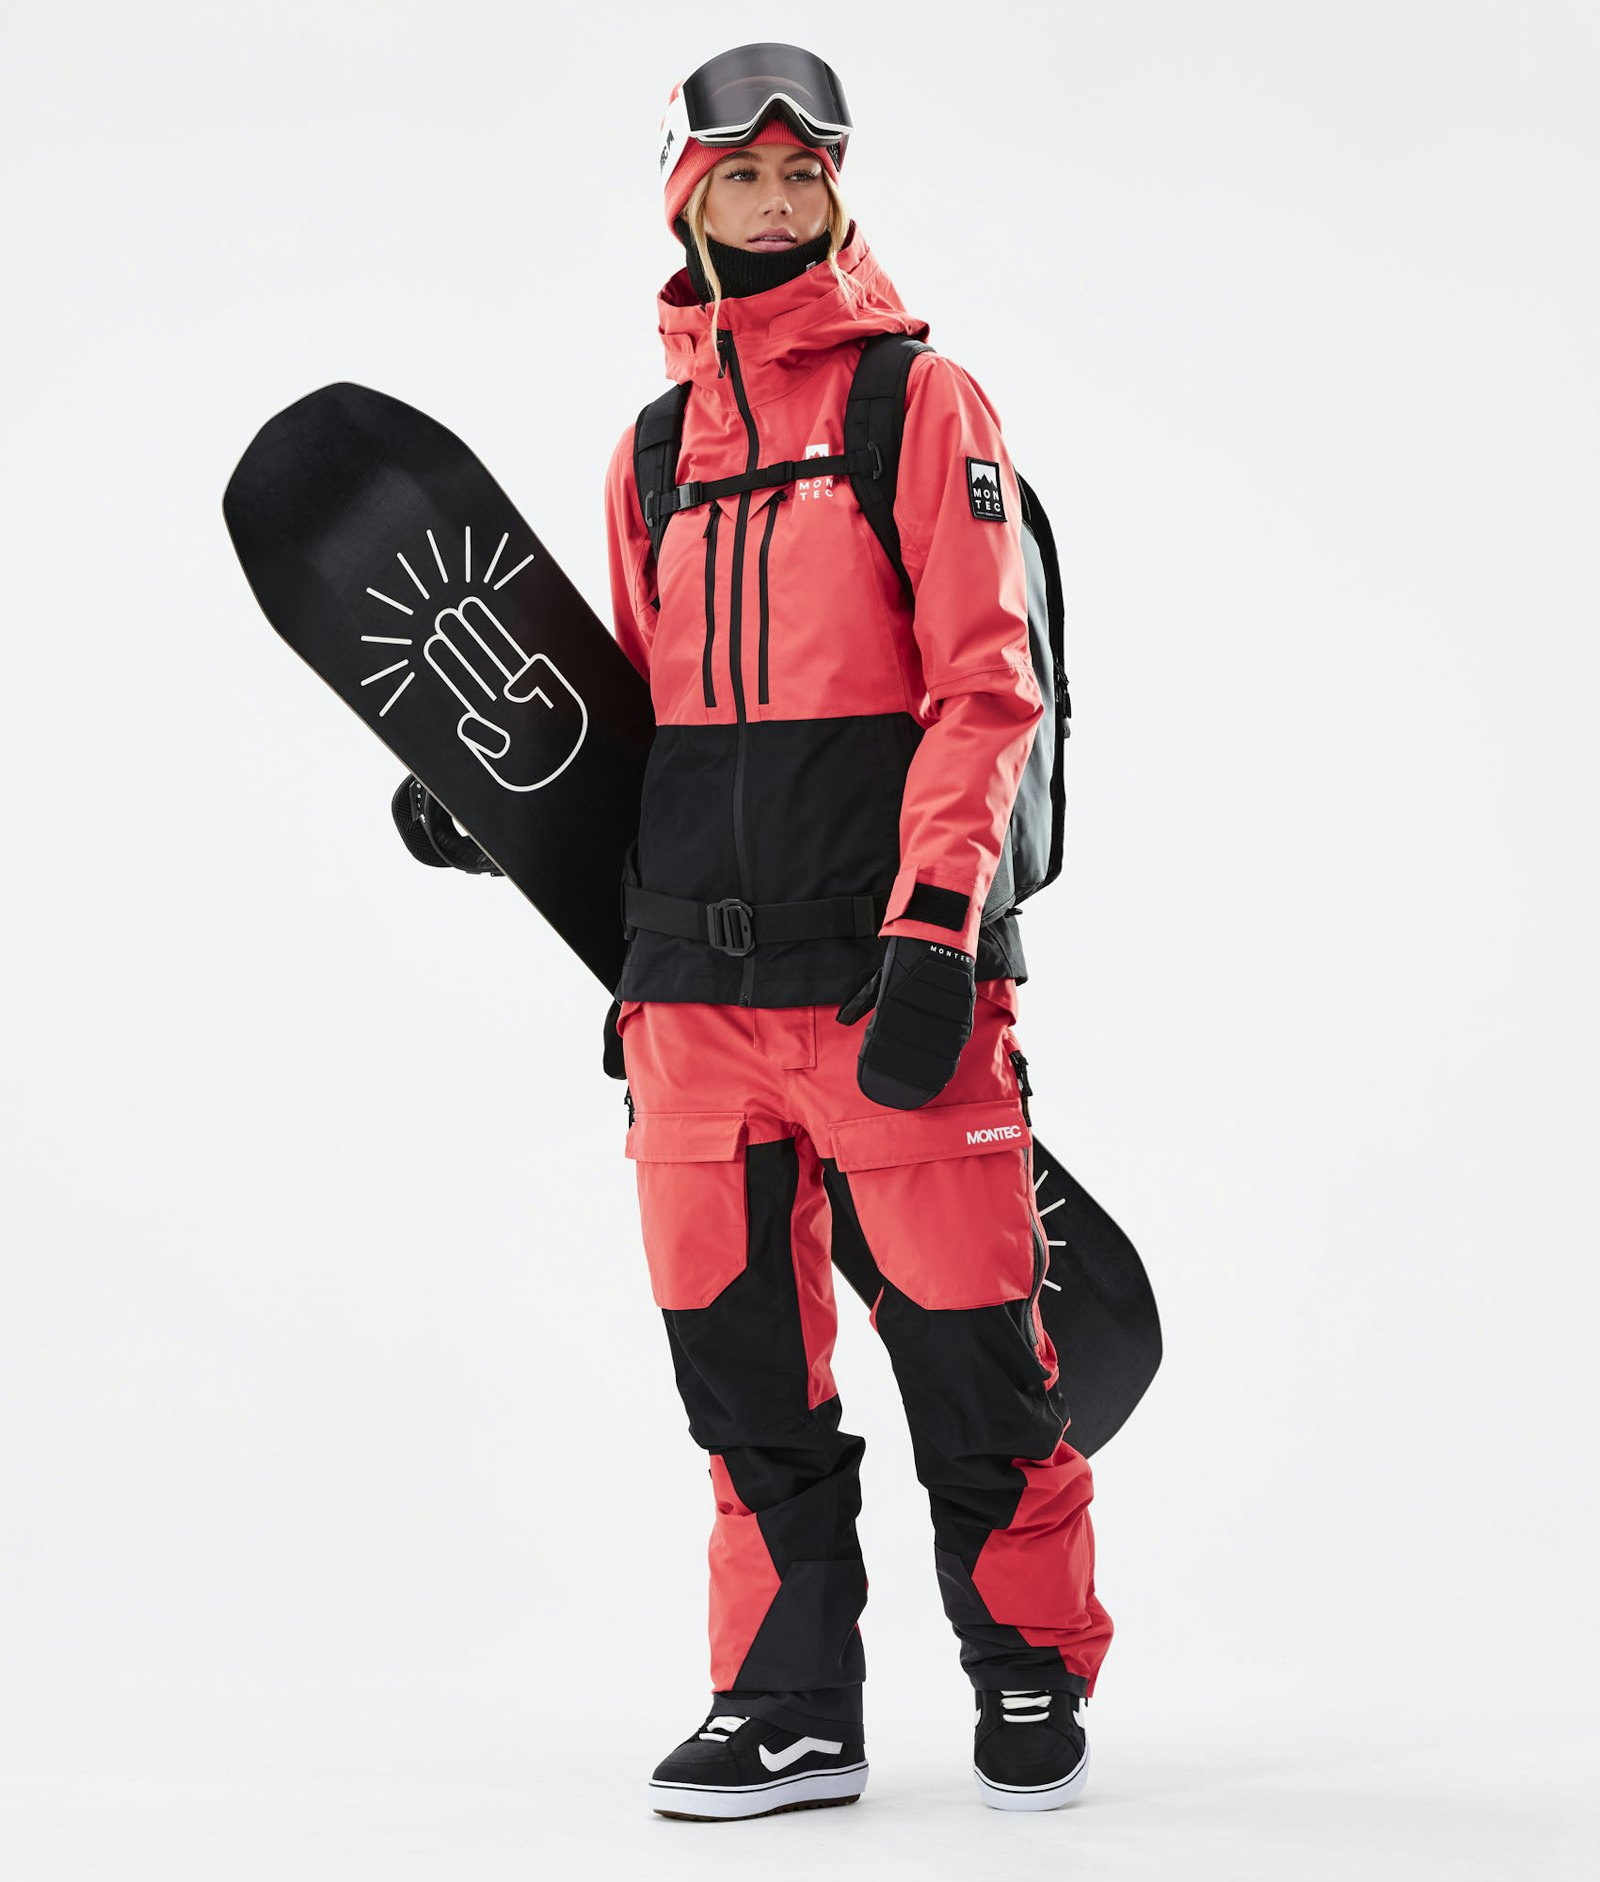 Moss W 2021 Veste Snowboard Femme Coral/Black